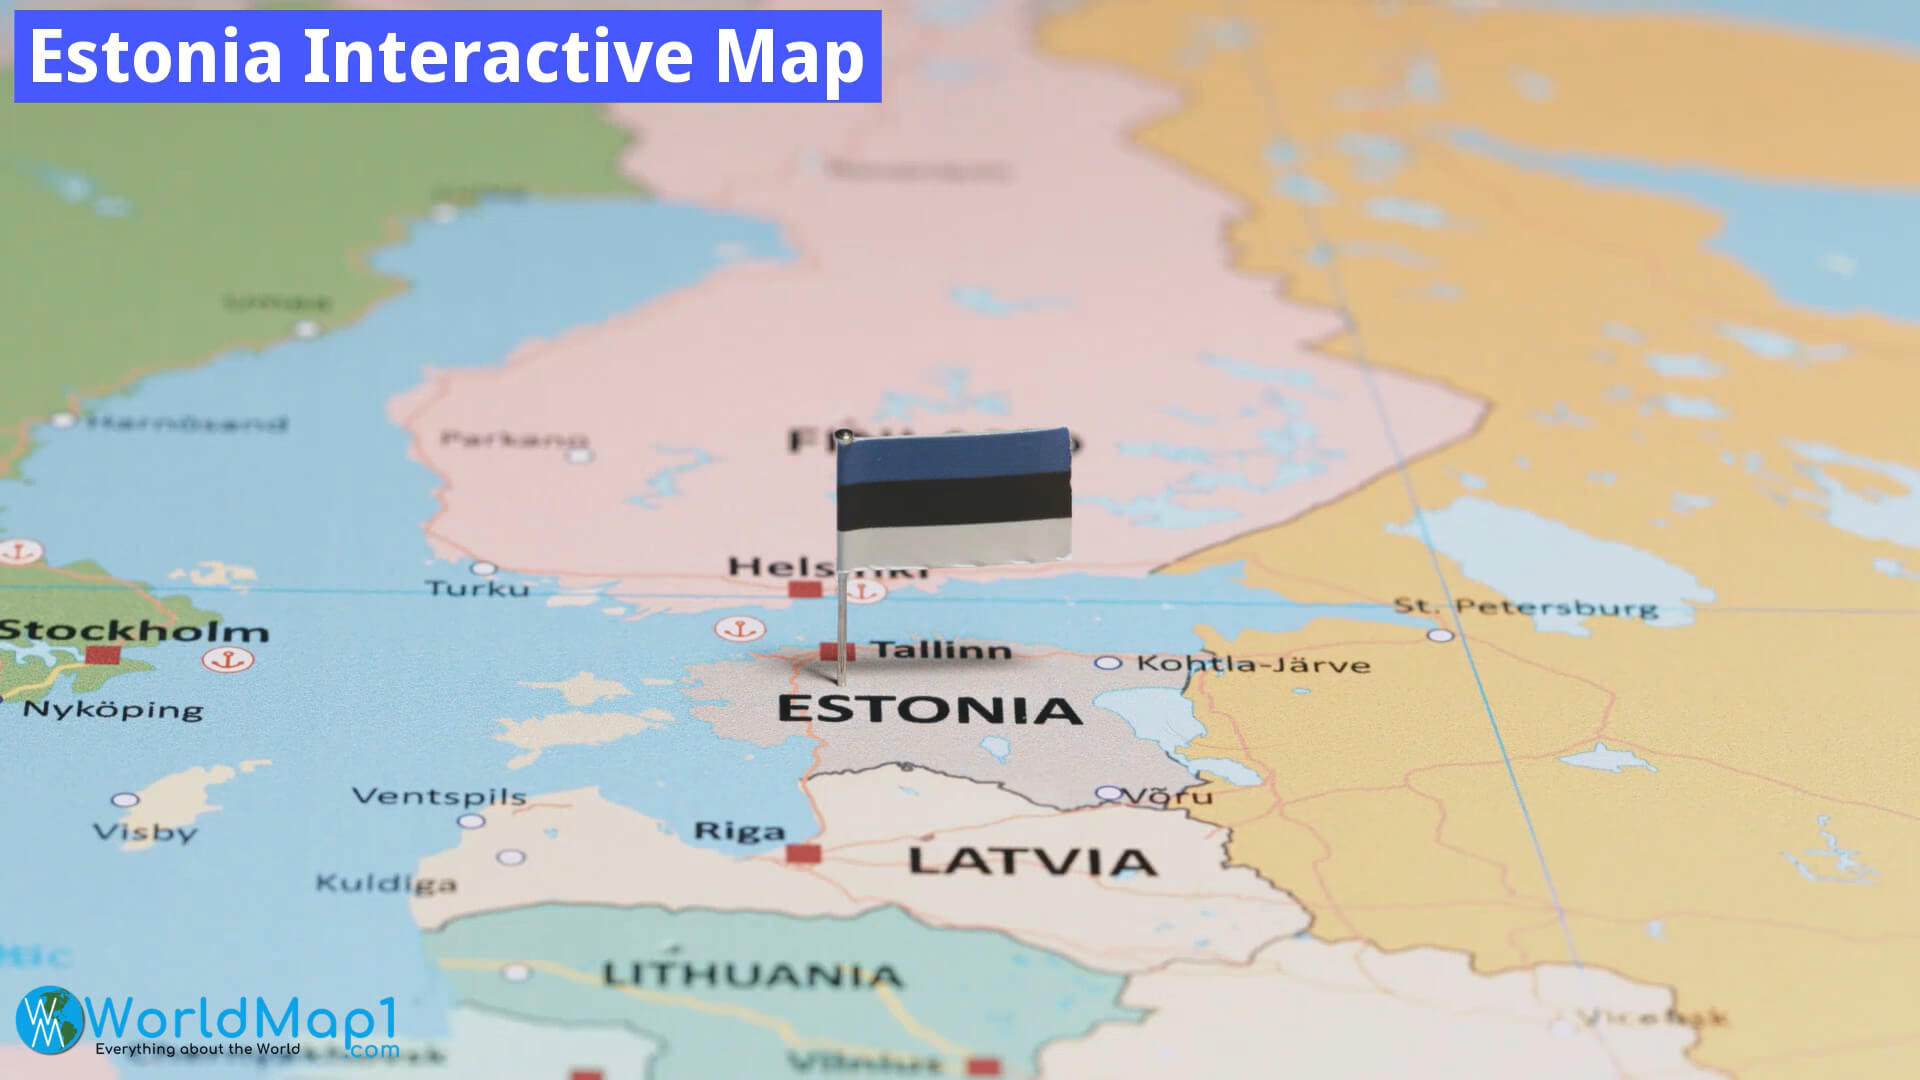 Estonia Interactive Map